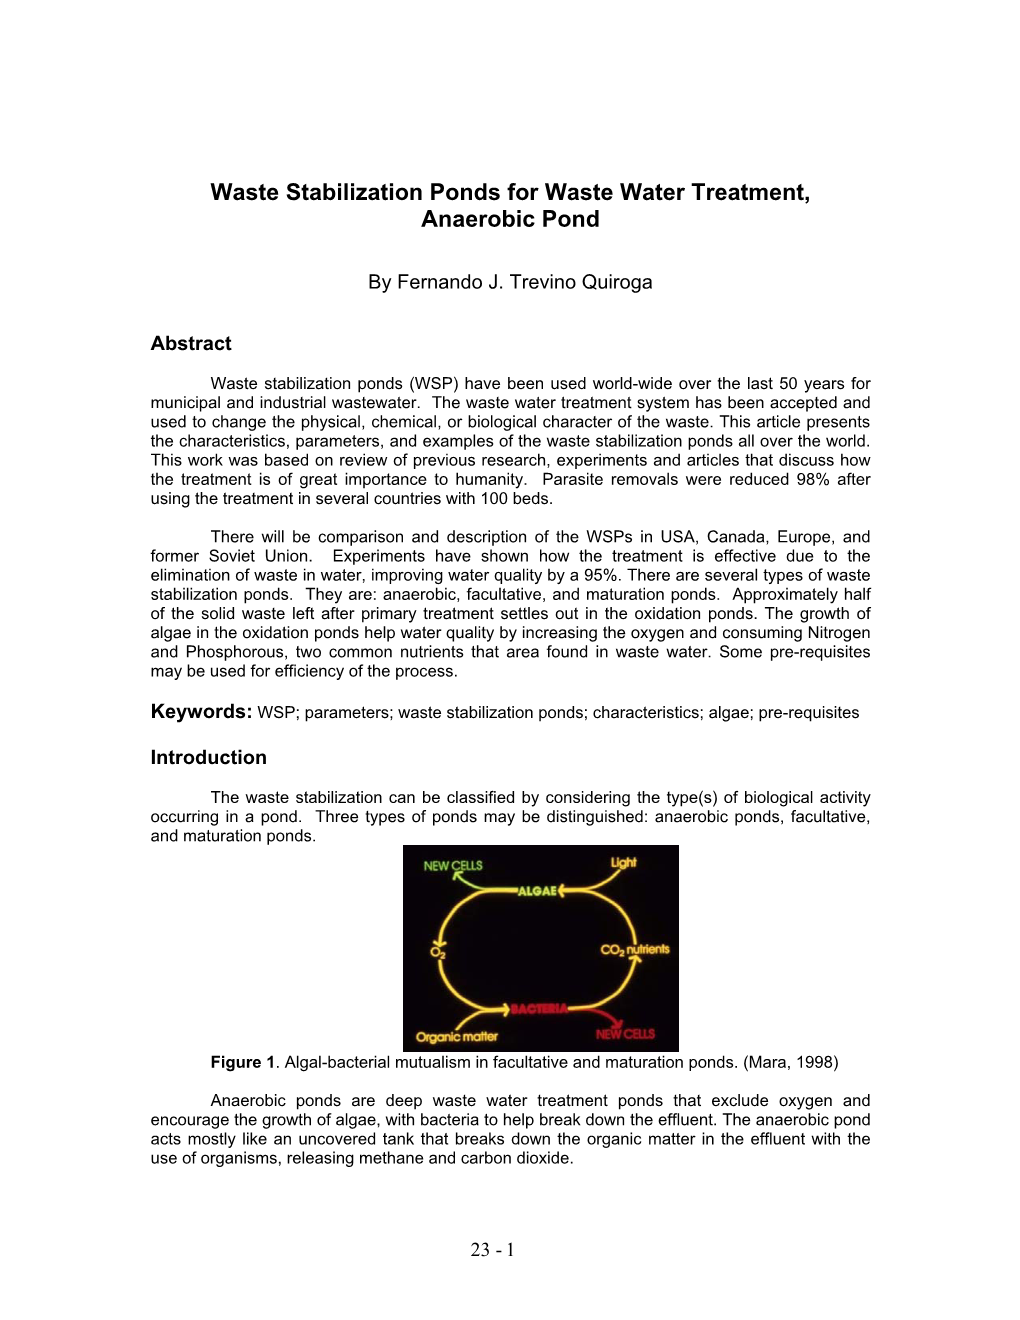 Waste Stabilization Ponds for Waste Water Treatment, Anaerobic Pond